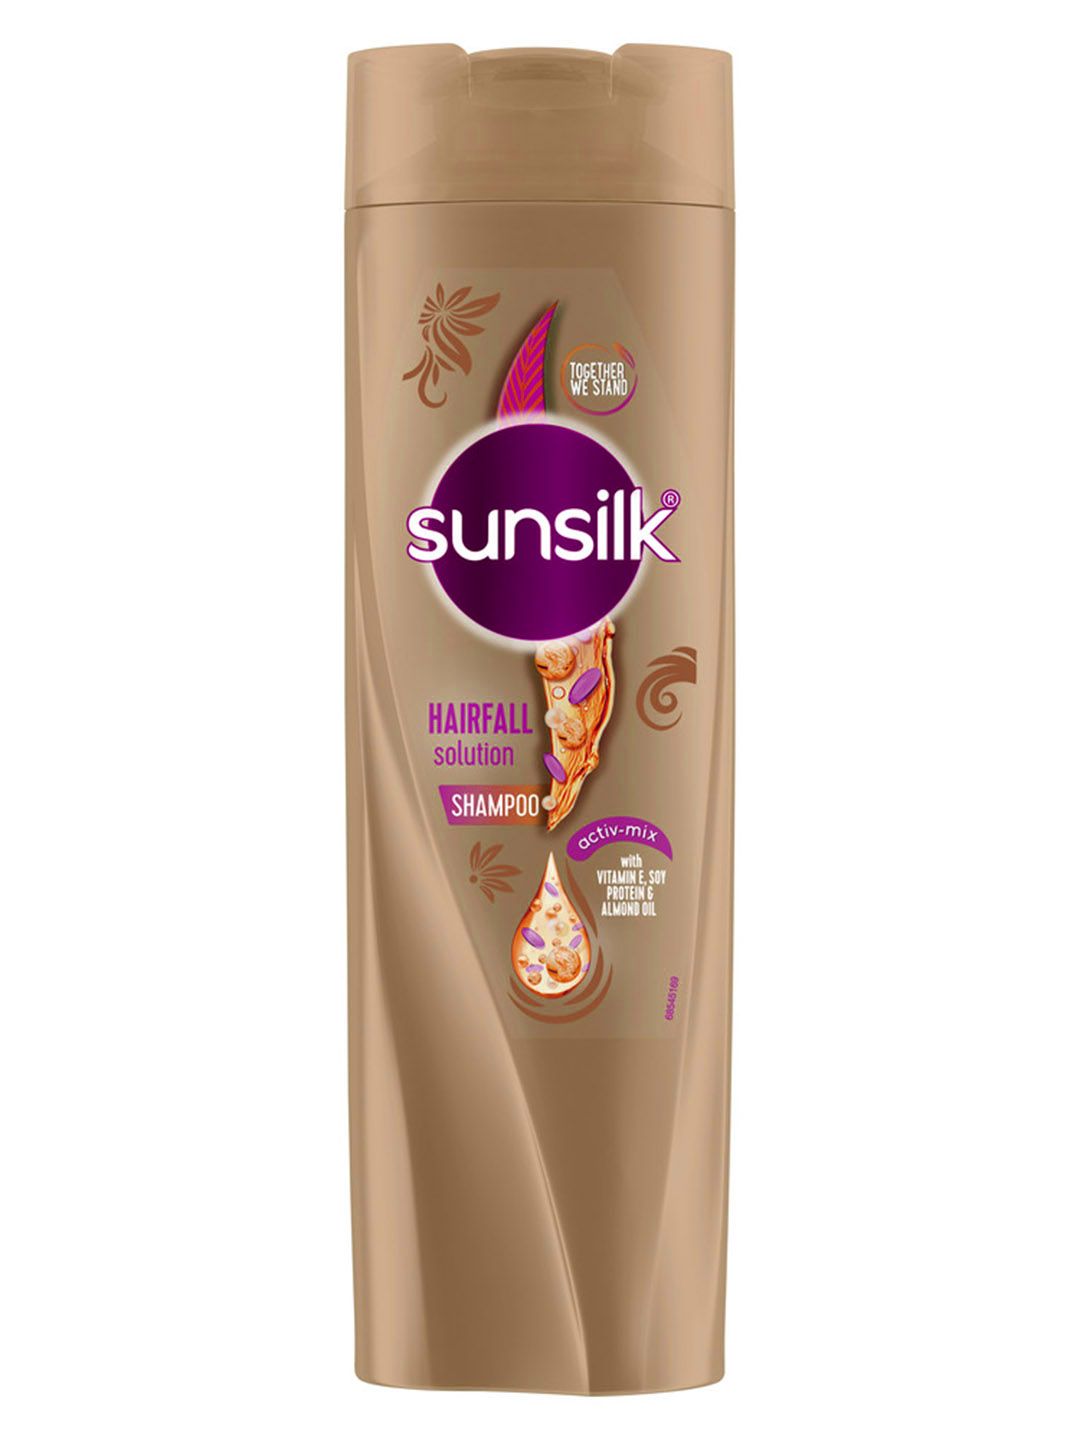 Sunsilk Hair Fall Solution Shampoo 360 ml Price in India